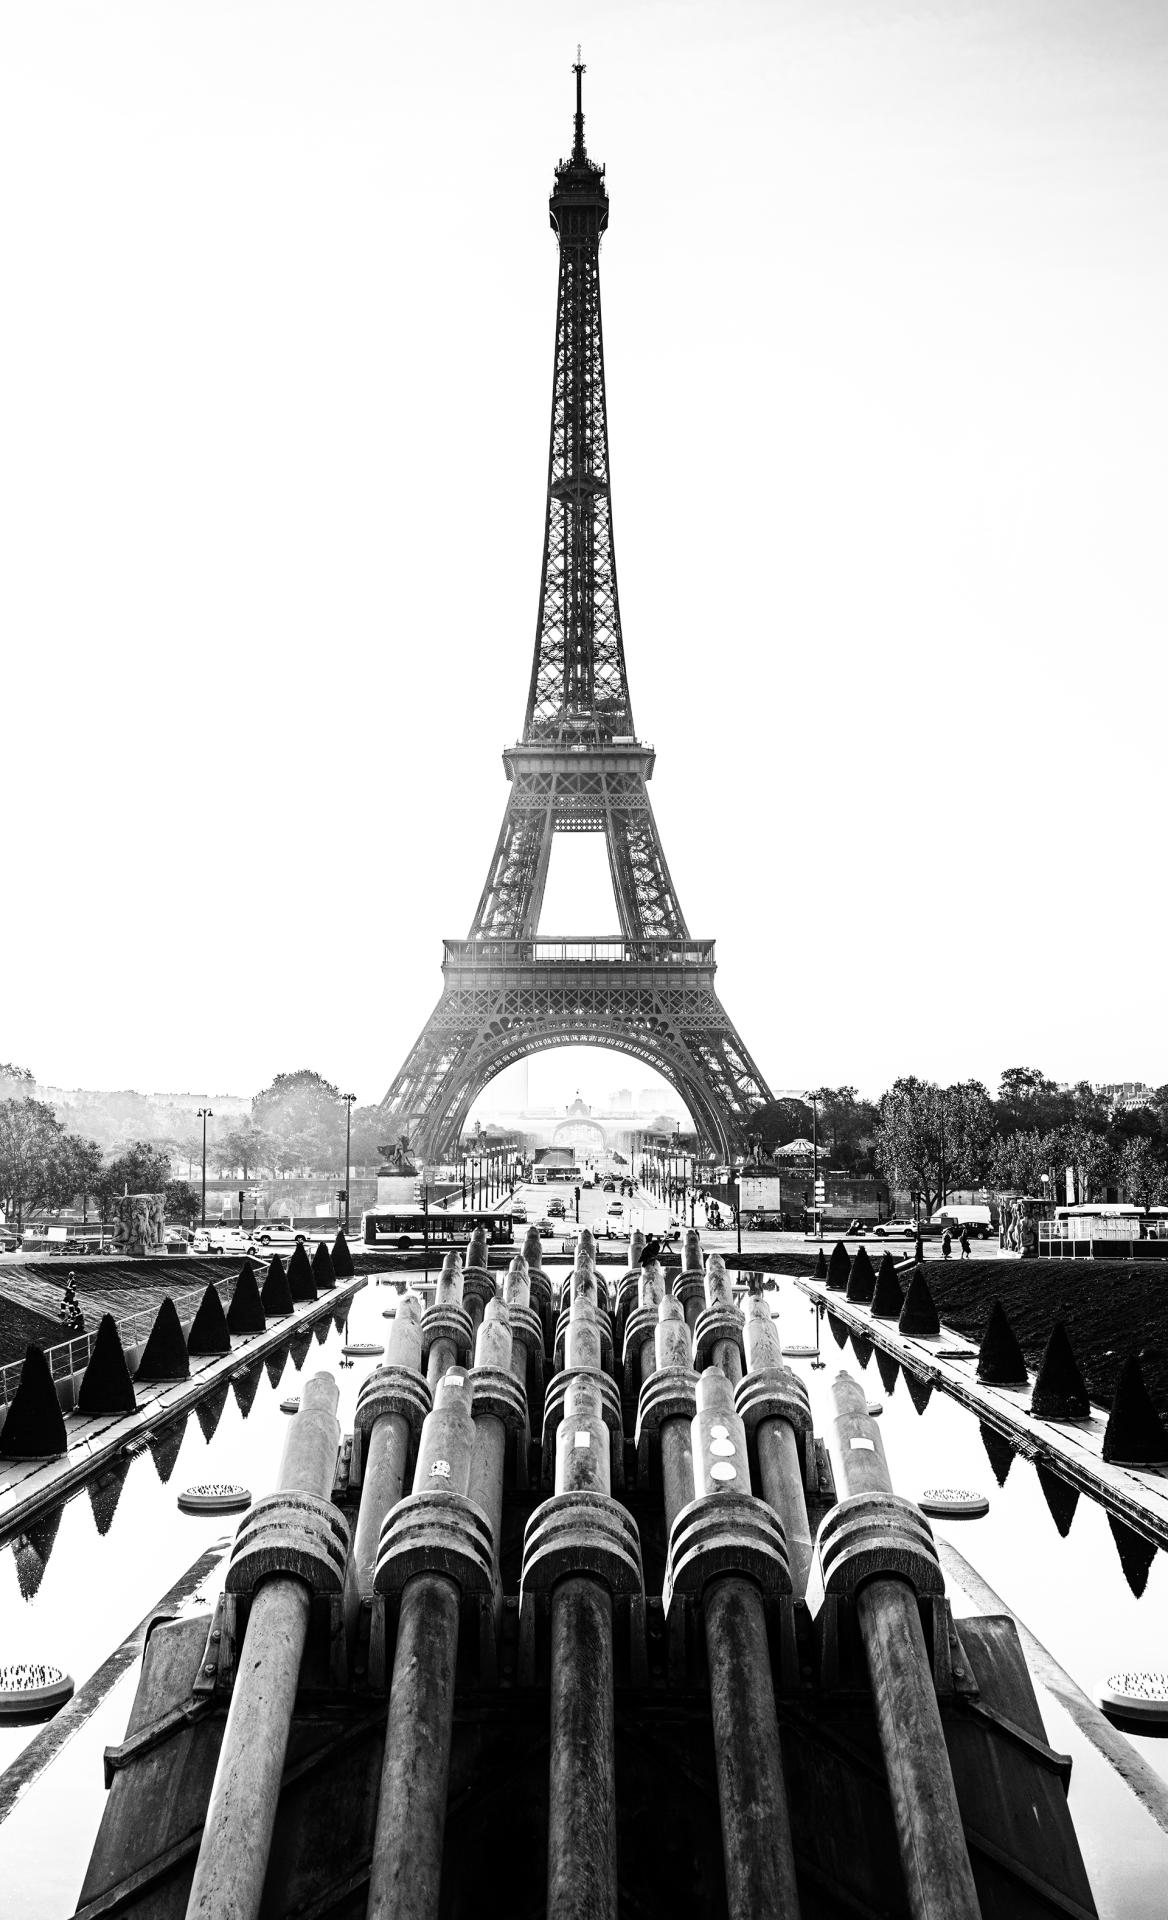 New York Photography Awards Winner - Eiffel Tower from Trocadero